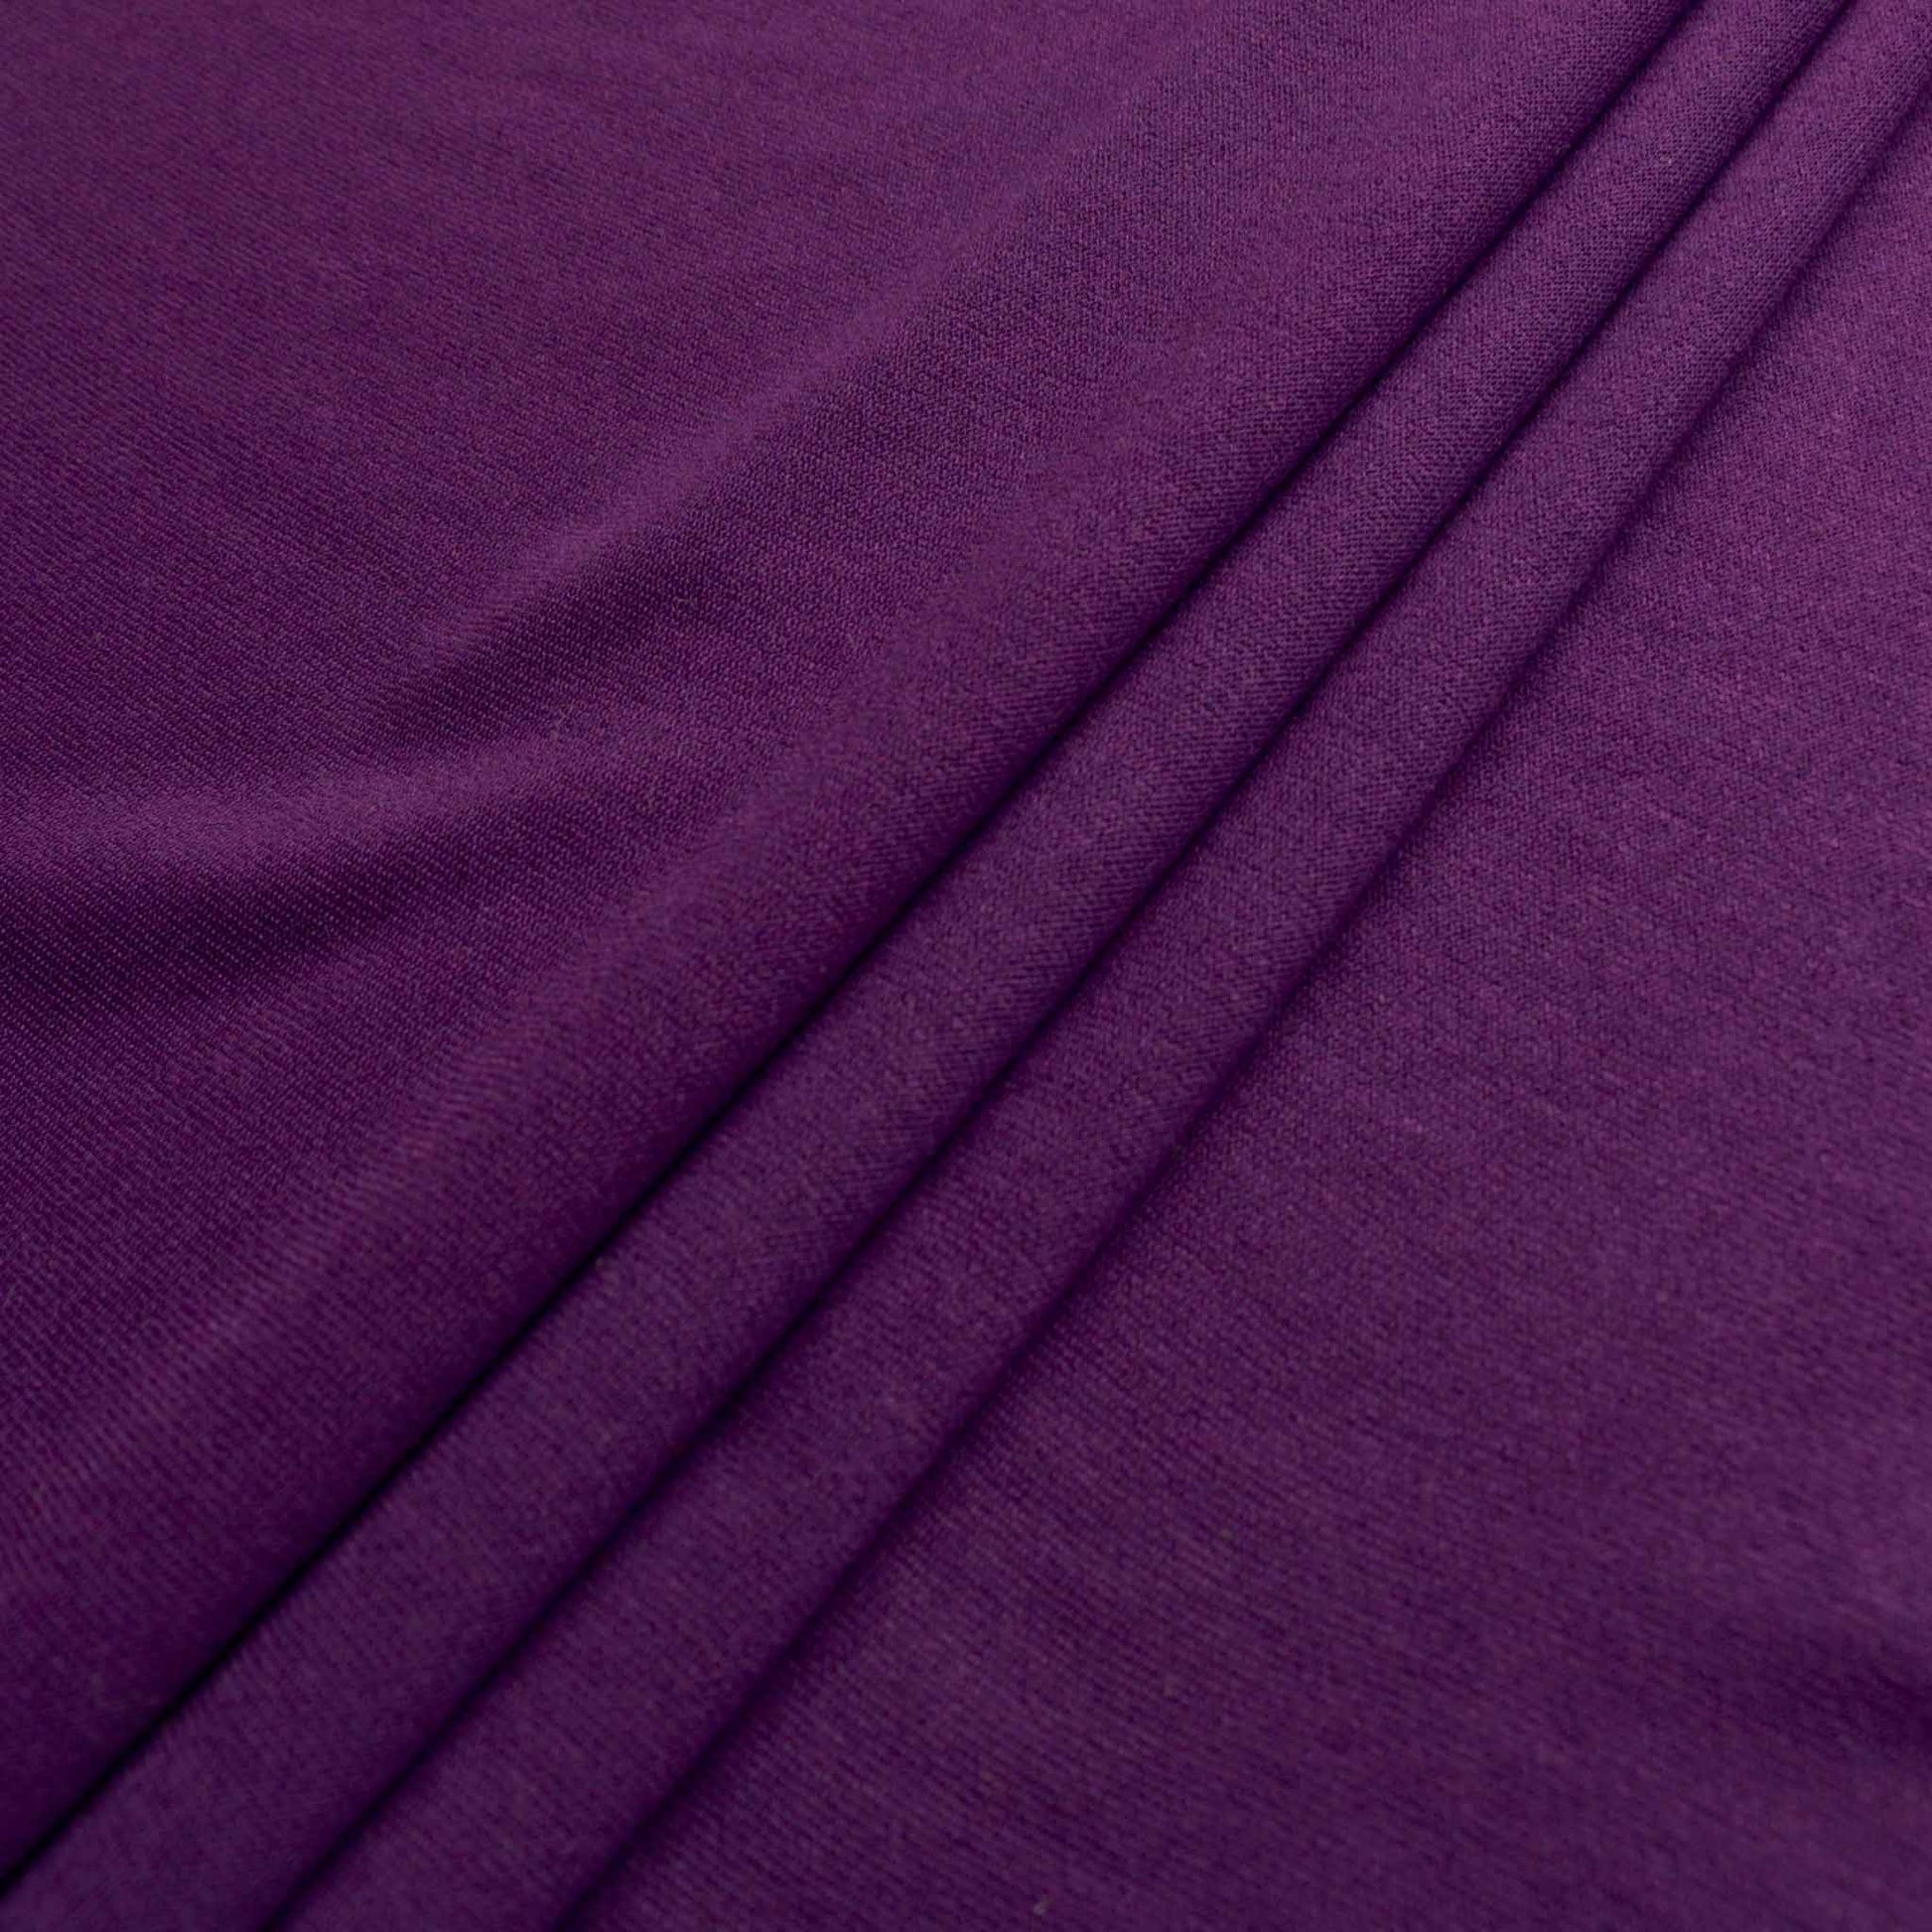 ponte roma jersey knit dress fabric in purple